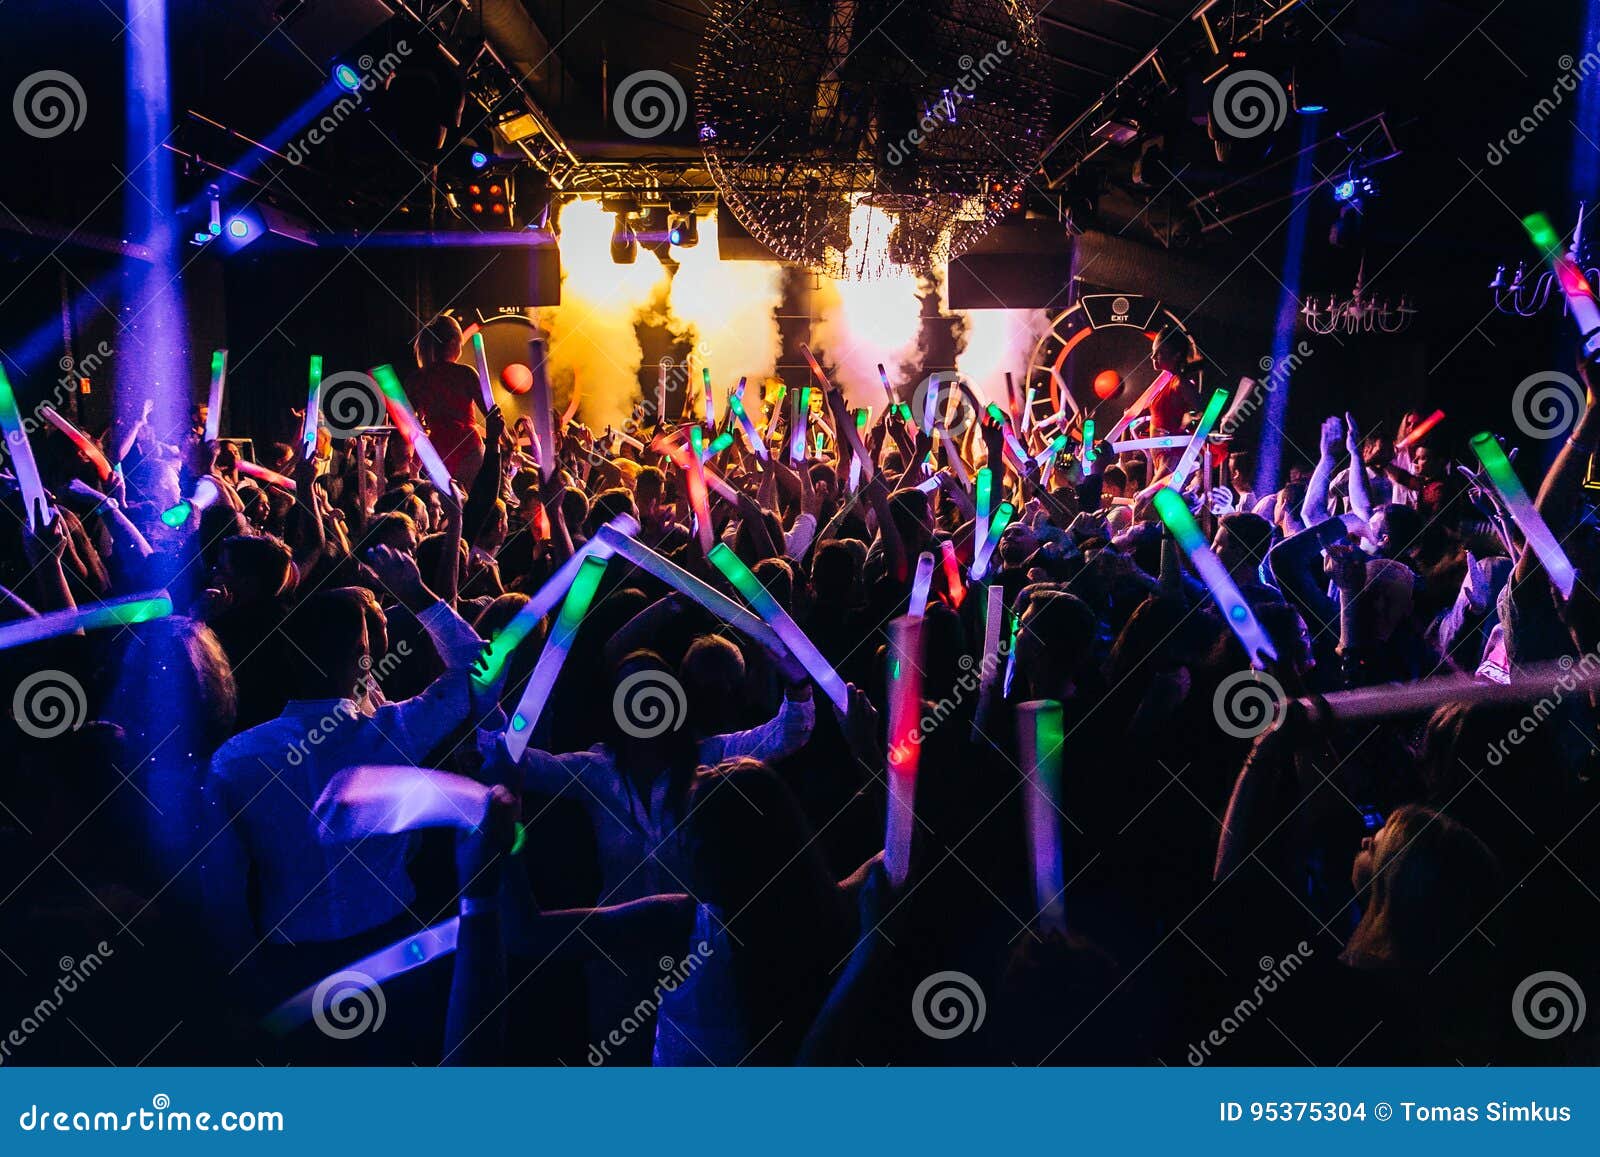 Nightclub crowd dancing editorial stock image. Image of concert - 95375304